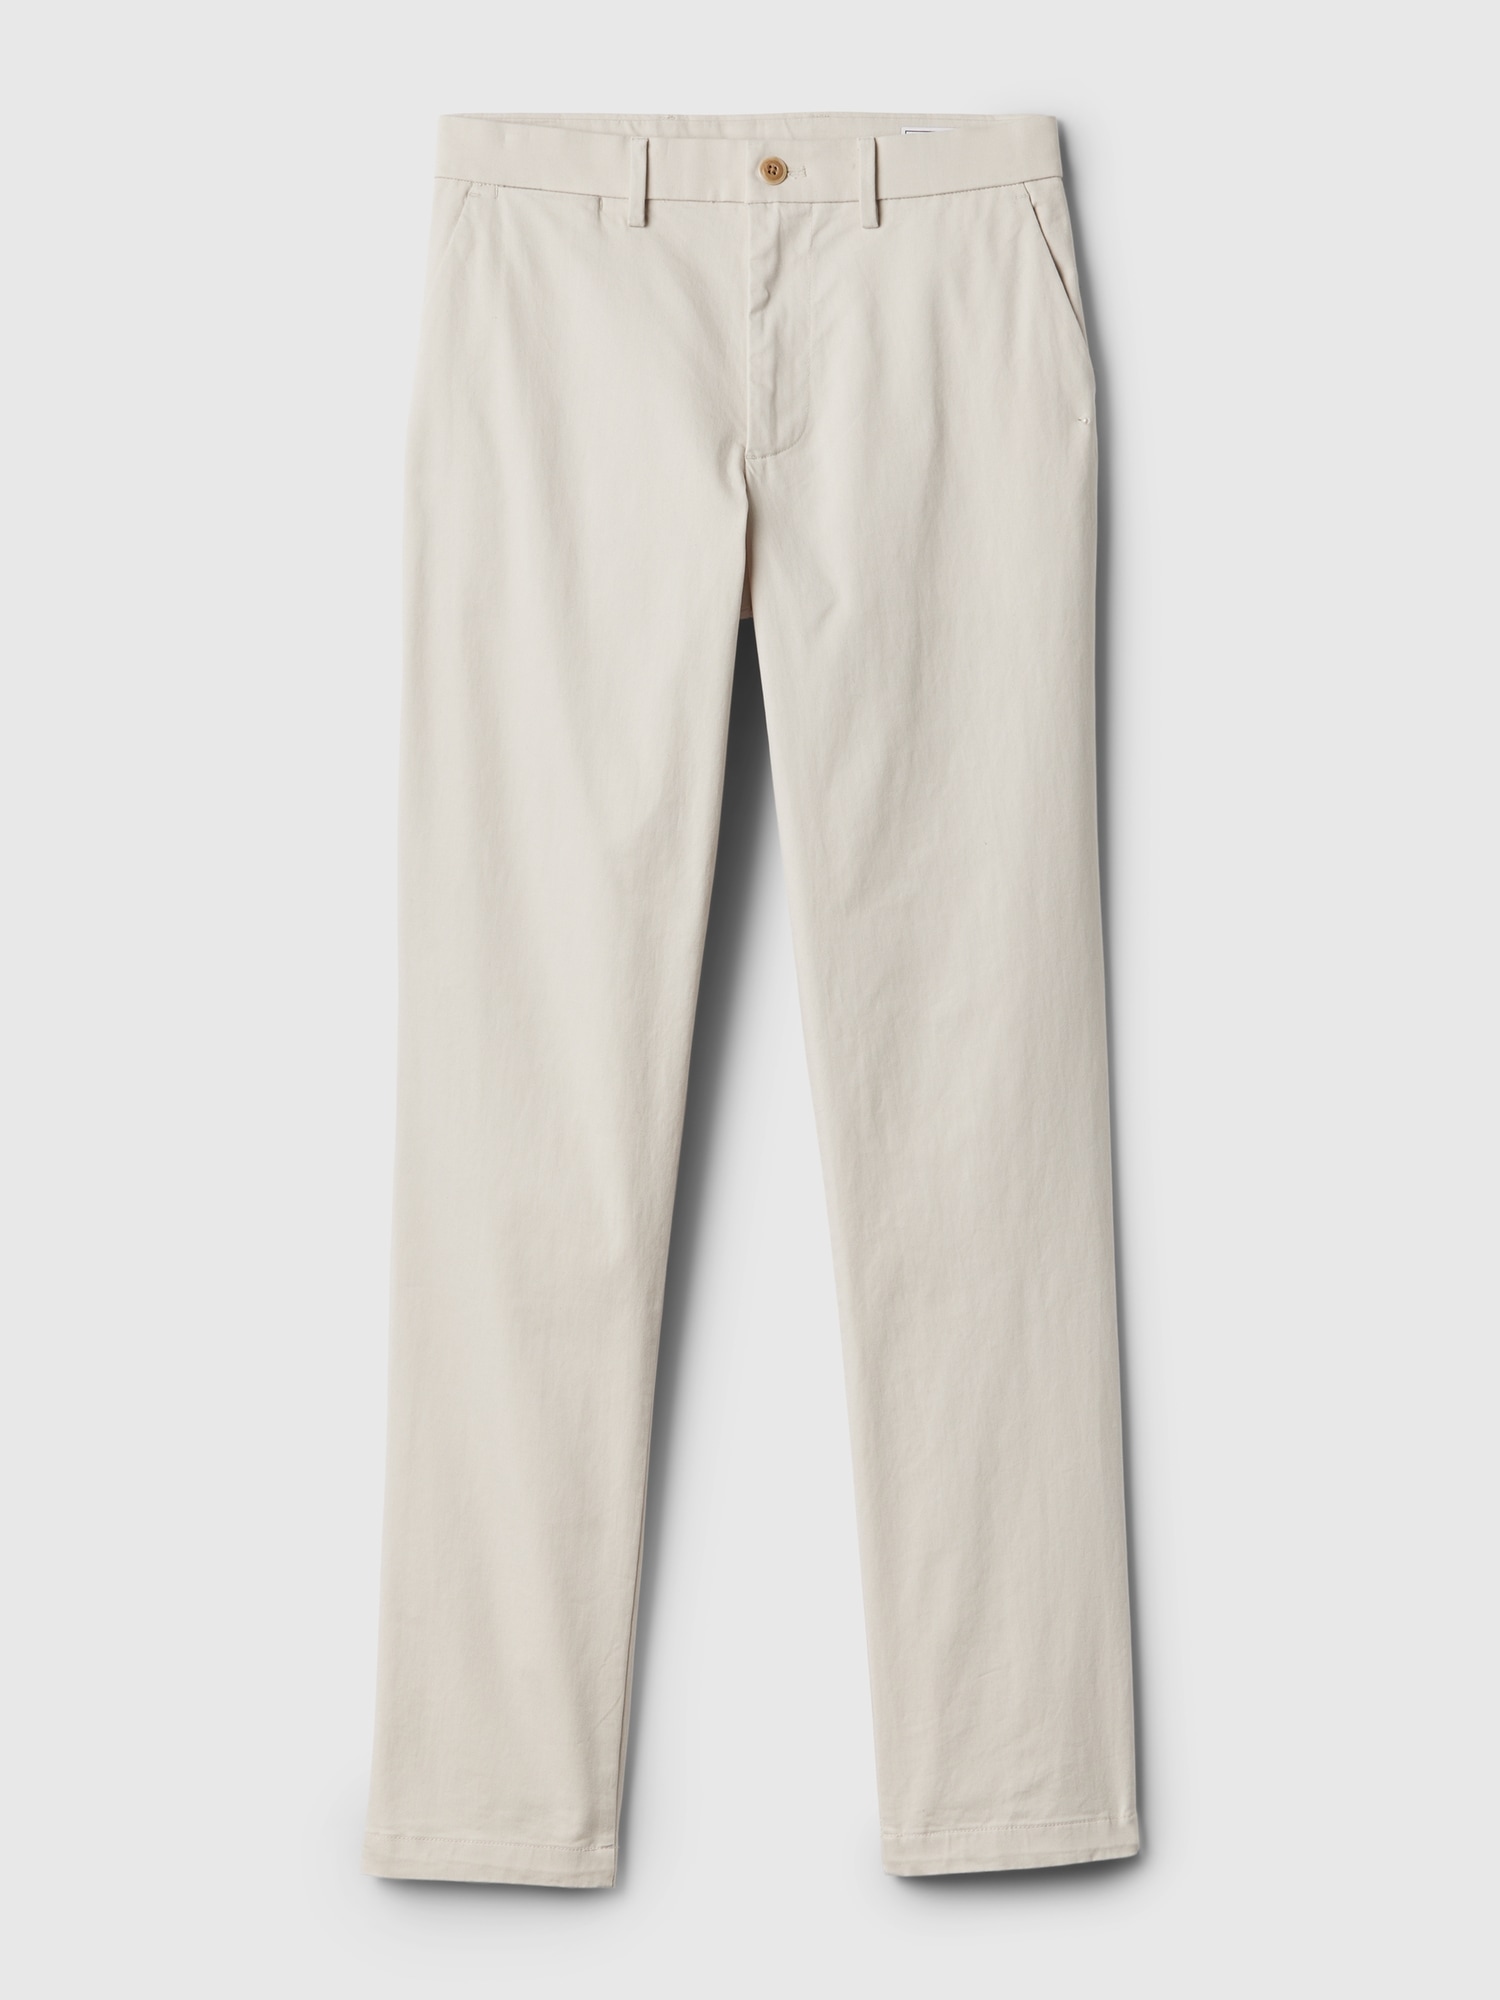 GAP Modern Chino Khaki Pants in Athletic Taper with Stretch GapFlex Size 40  x 30